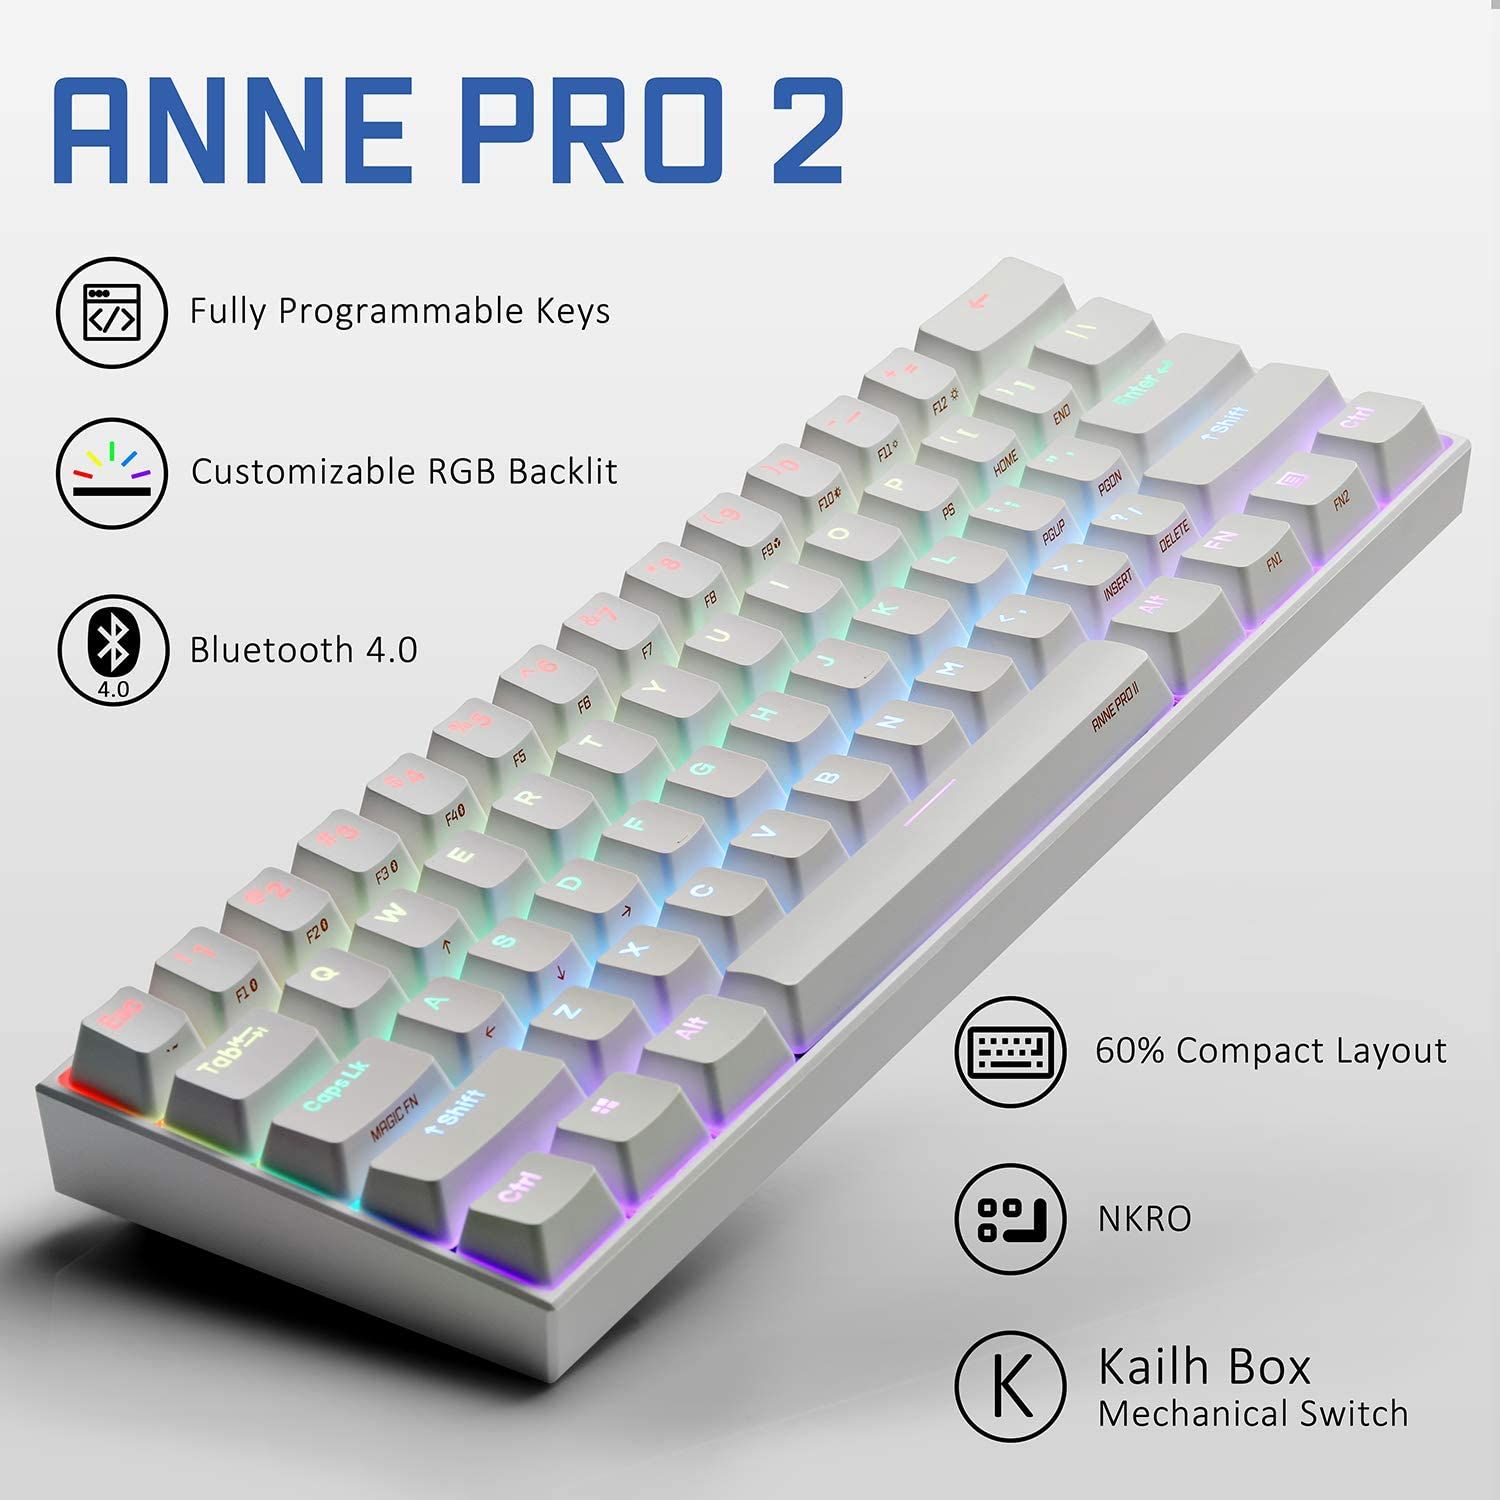 Anne Pro 2 feature list